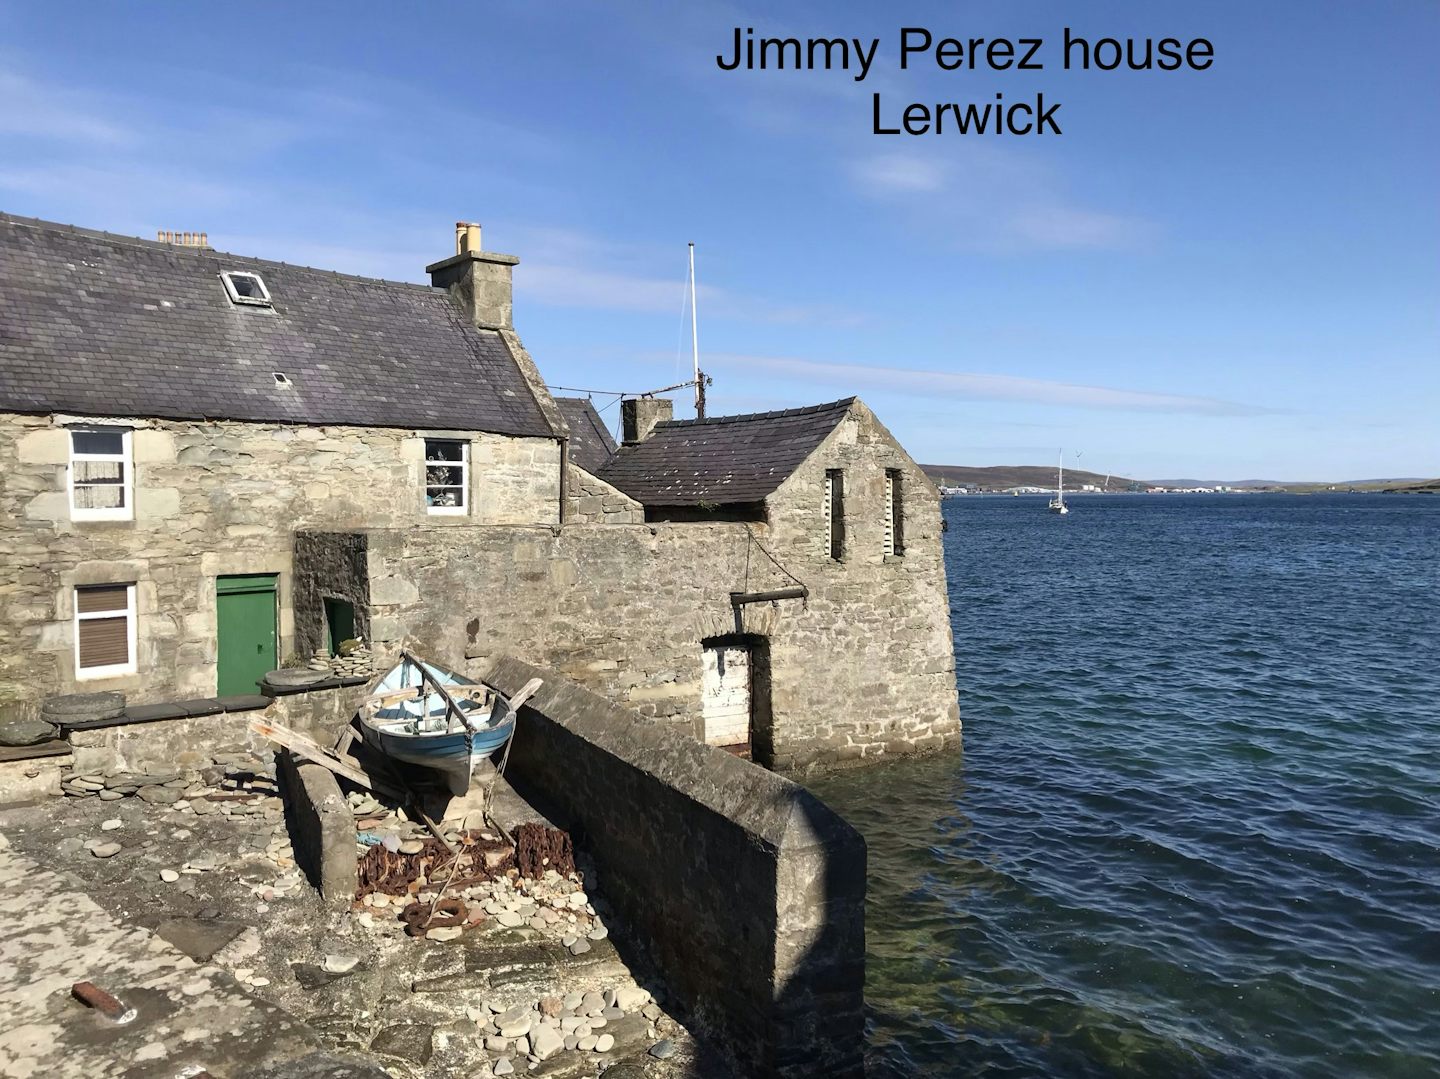 Jimmy Perez house
“Shetland”